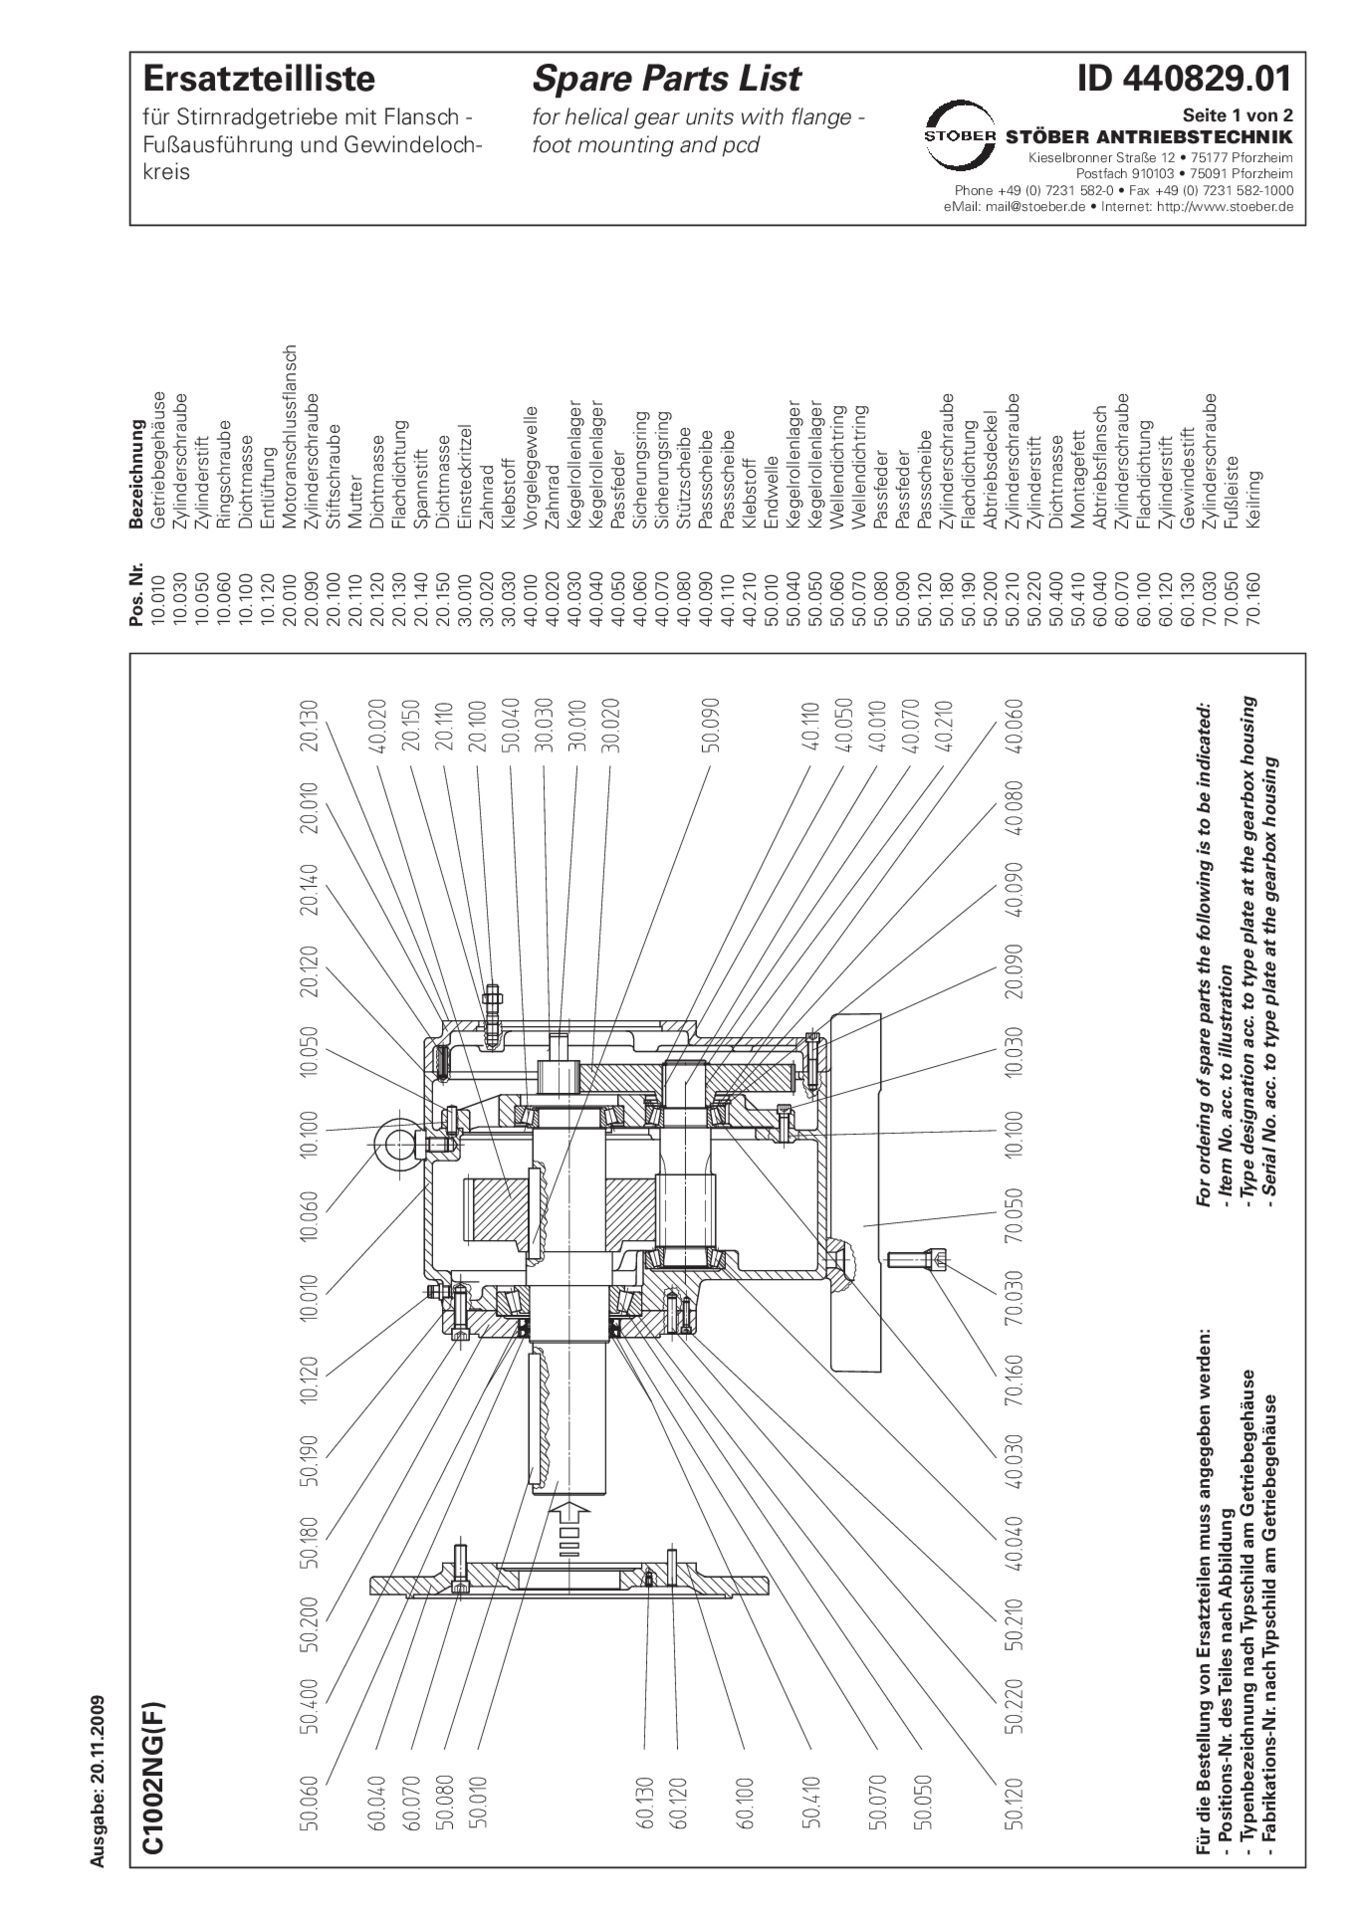 Replacement parts list helical gear units C1002 NG NFErsatzteilliste Stirnradgetriebe C1002 NG NF